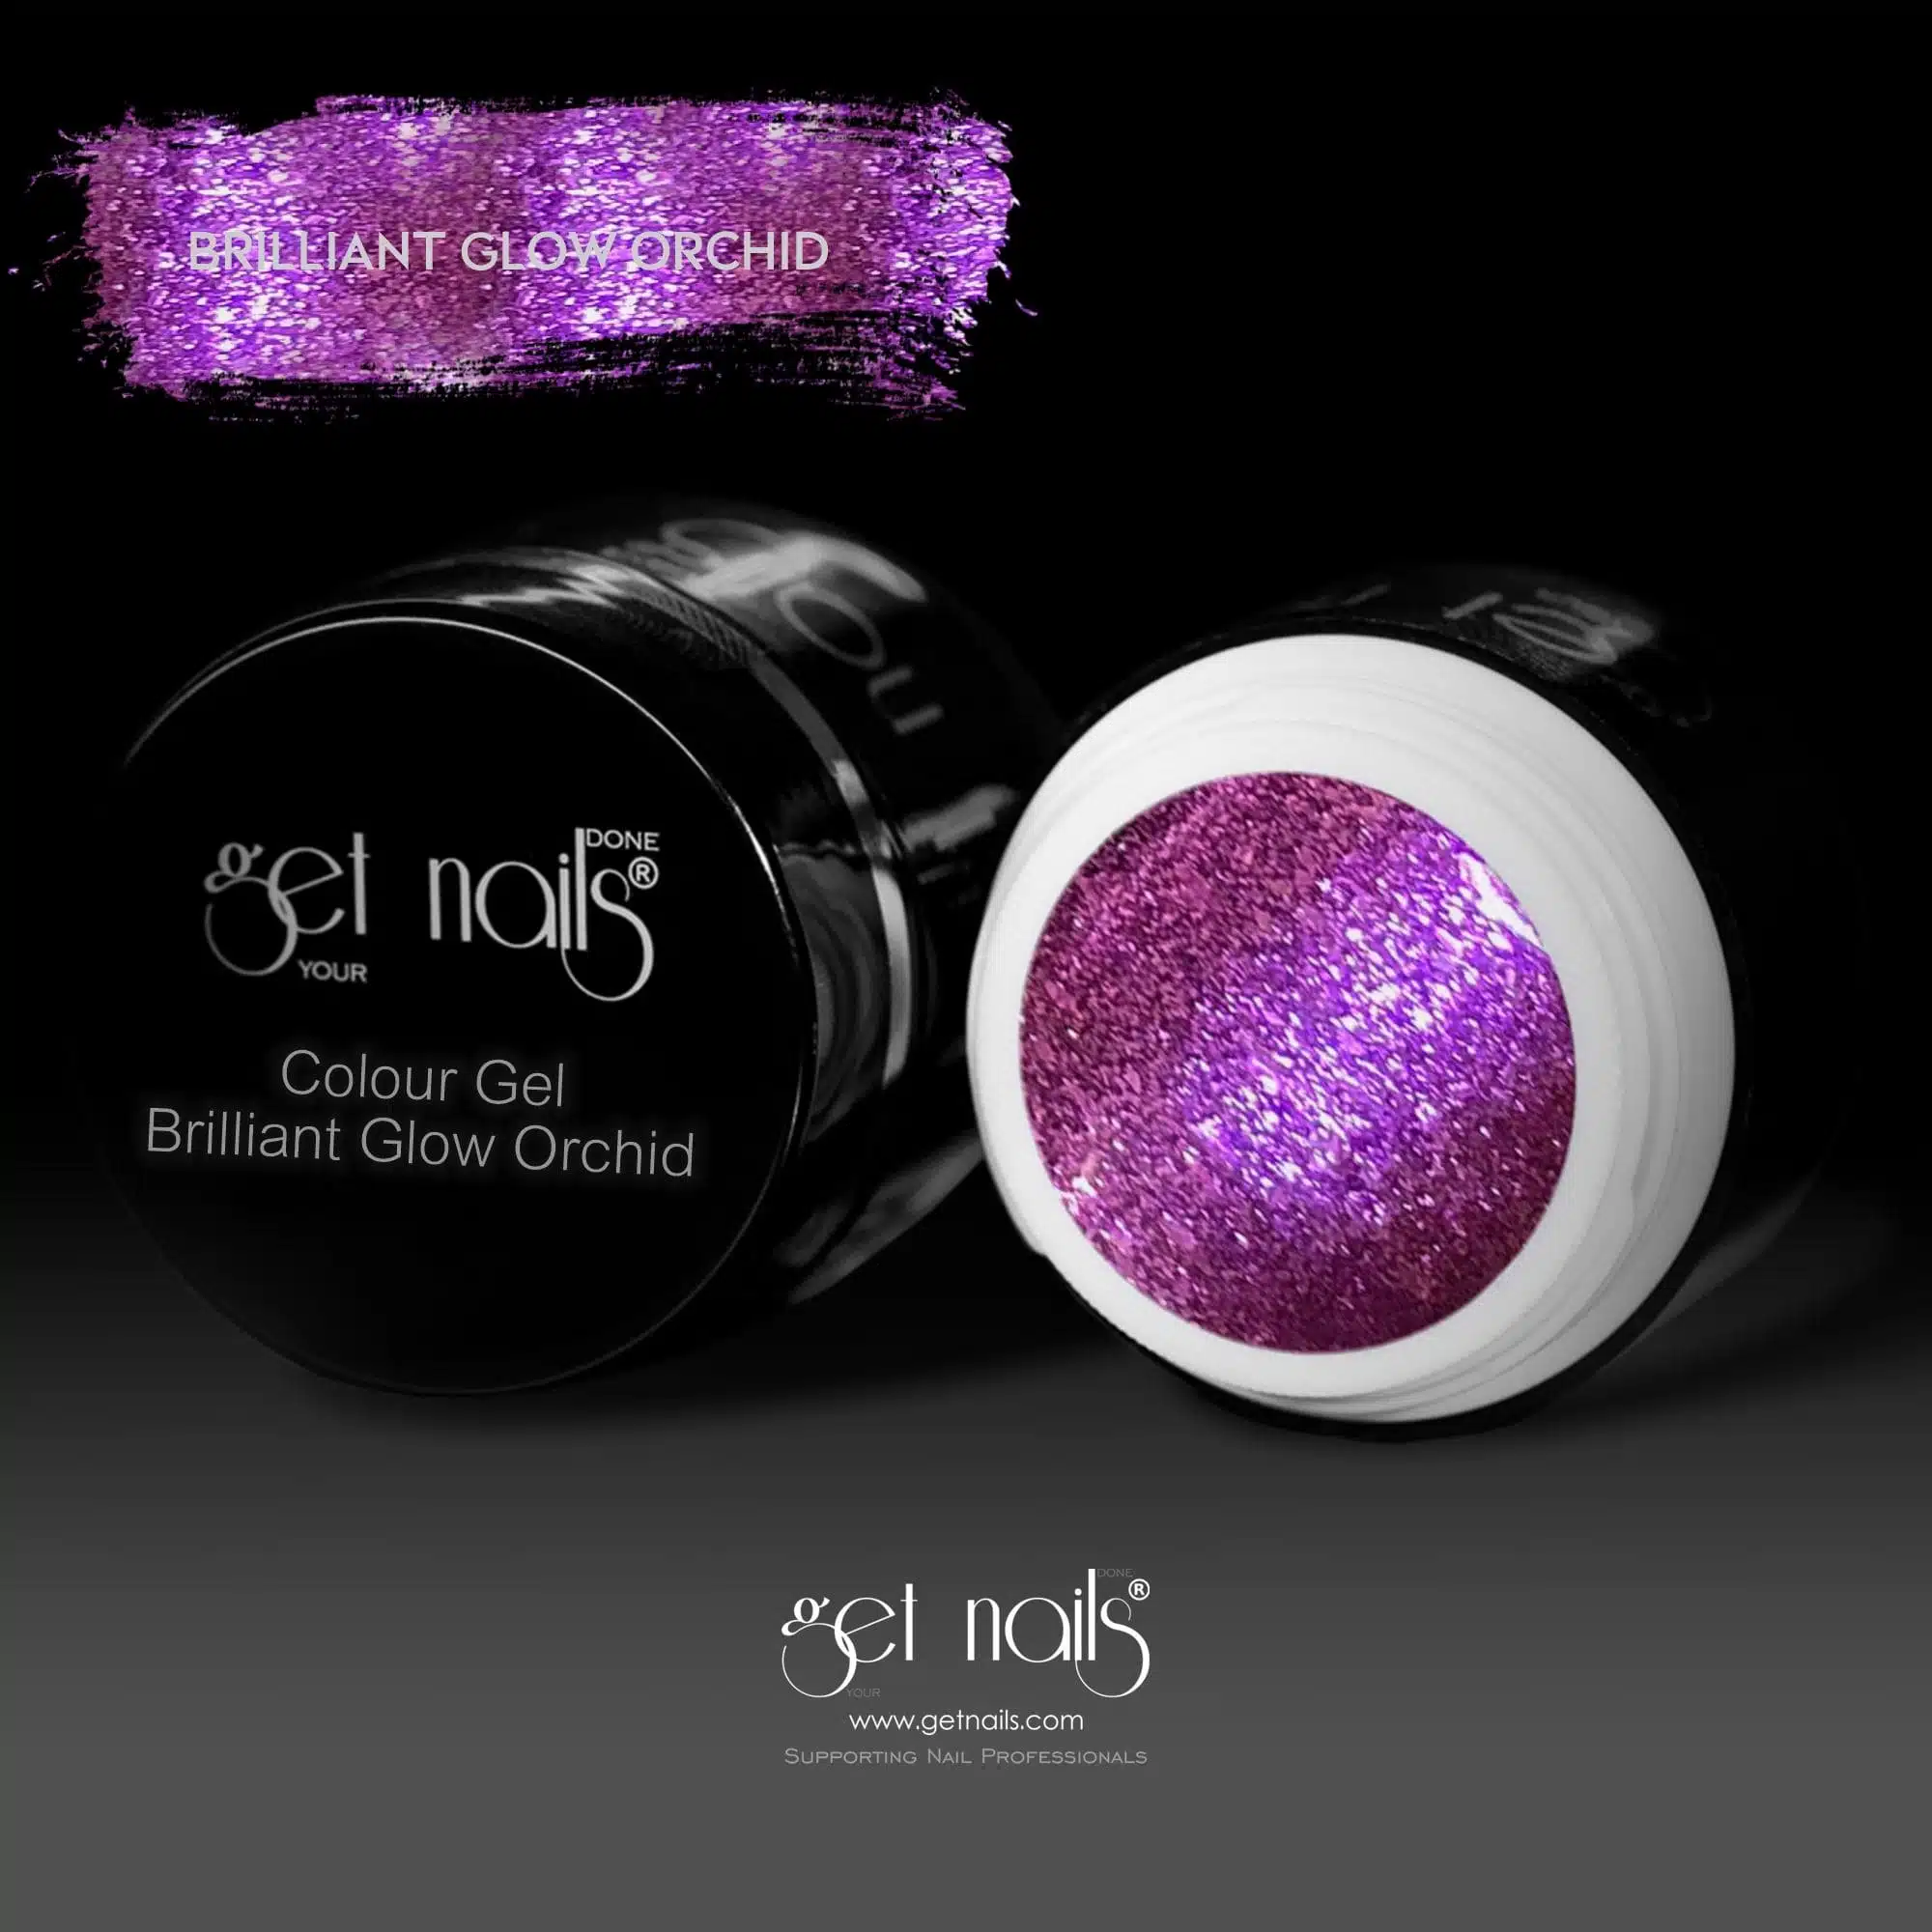 Get Nails Austria - Цветной гель Brilliant Glow Orchid 5g